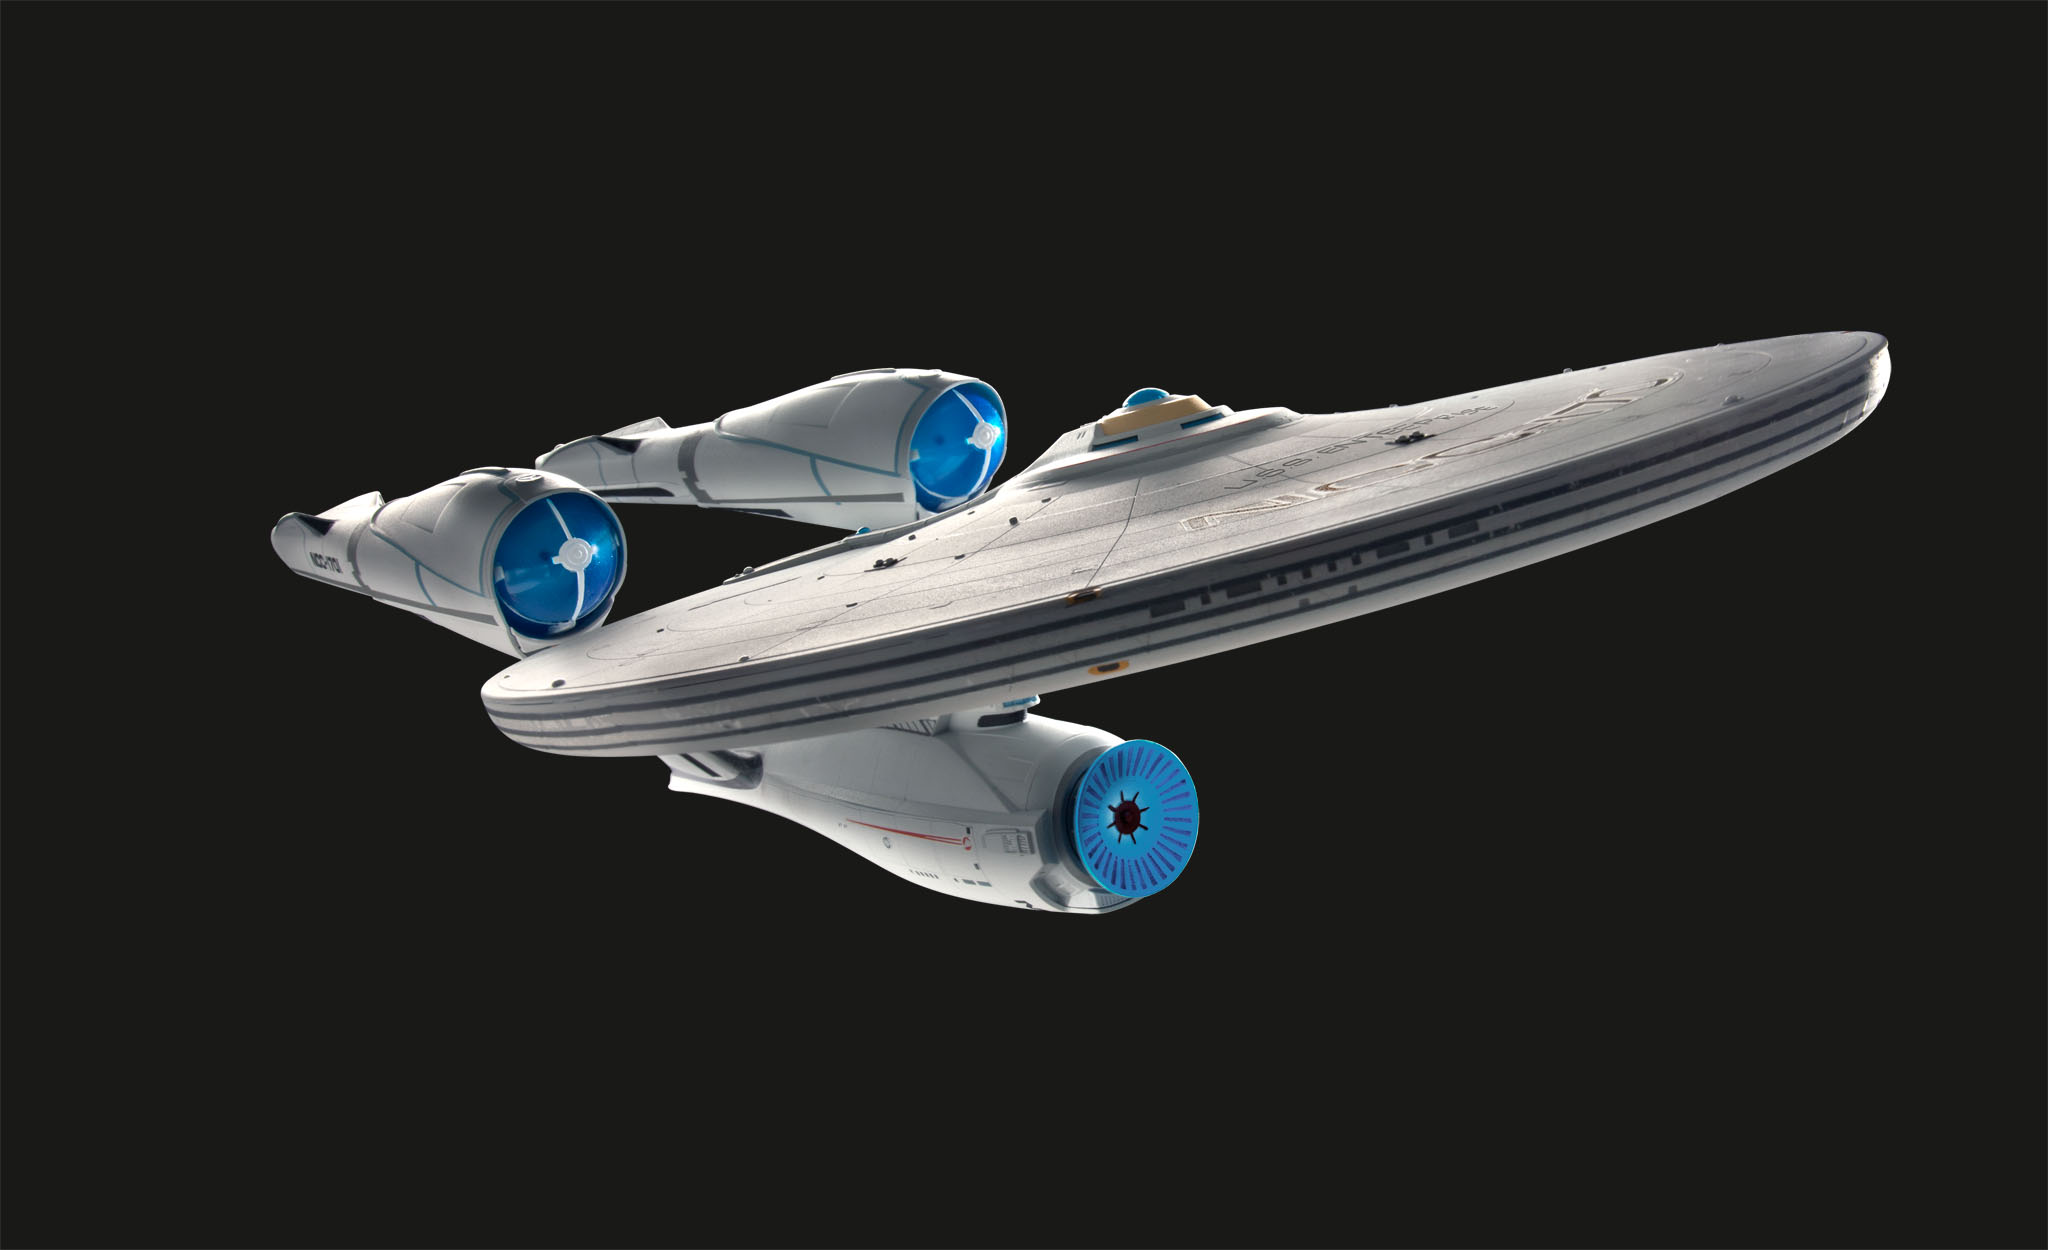 NCC Enterprise 1701 - Revell 1:500 U.S.S. Enterprise NCC-1701